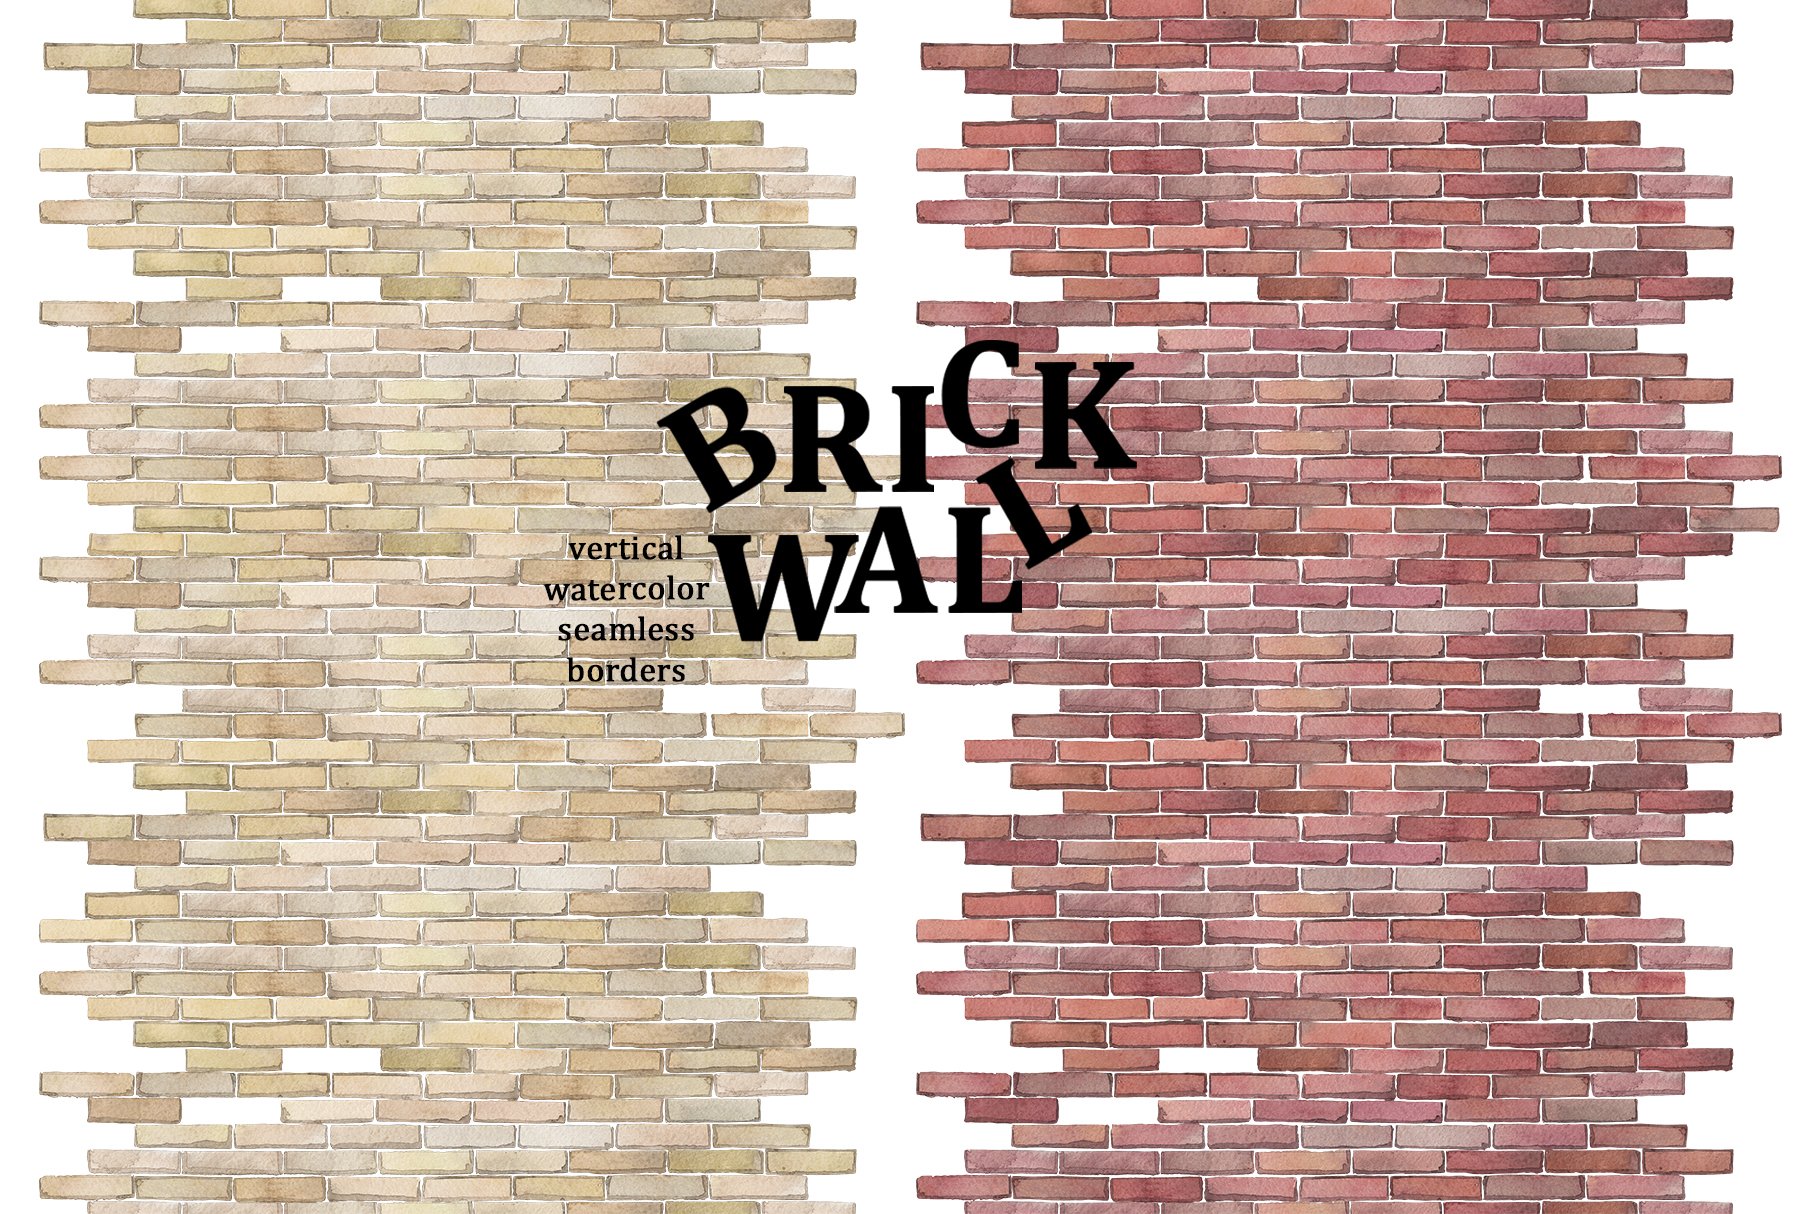 Two options of bricks.